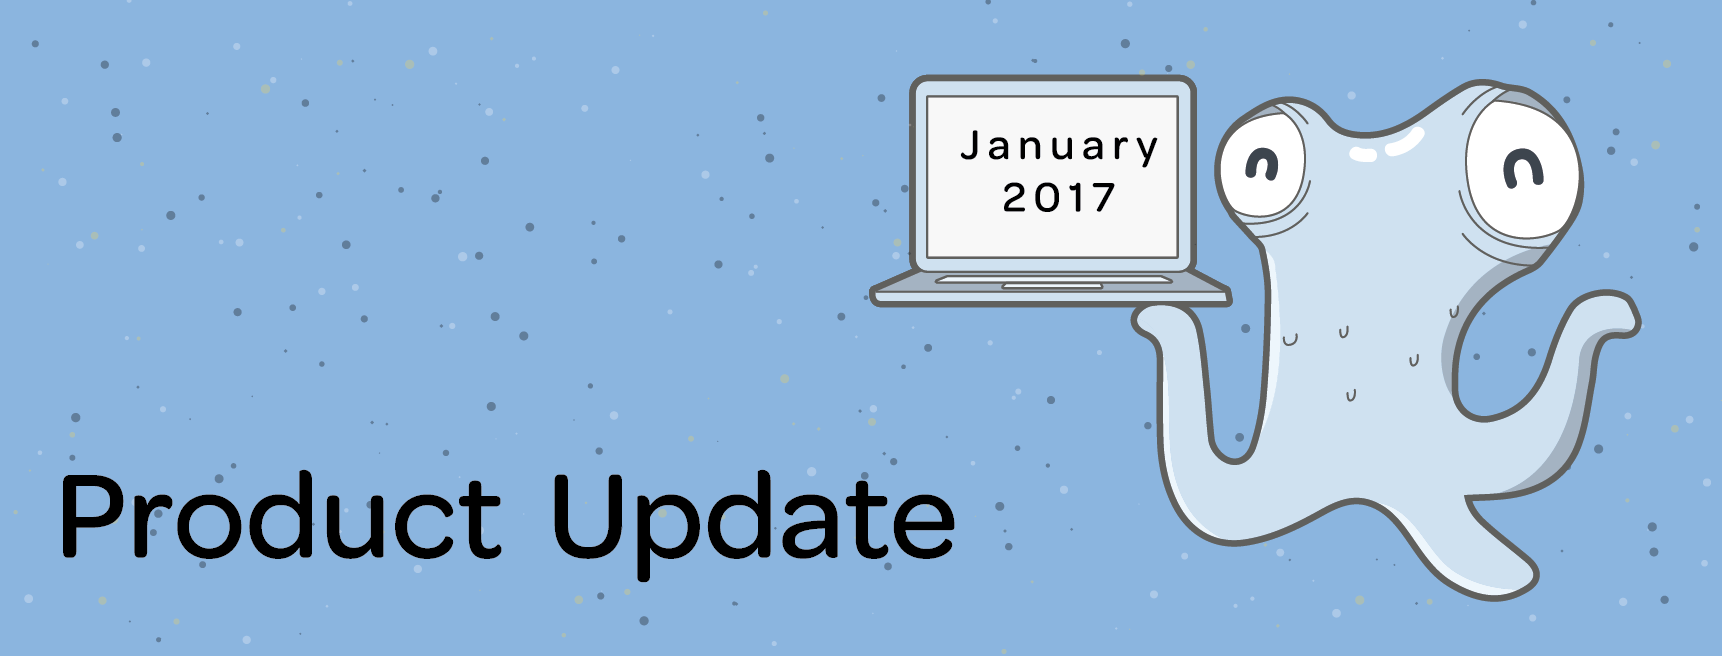 marketgoo product update jan 2017